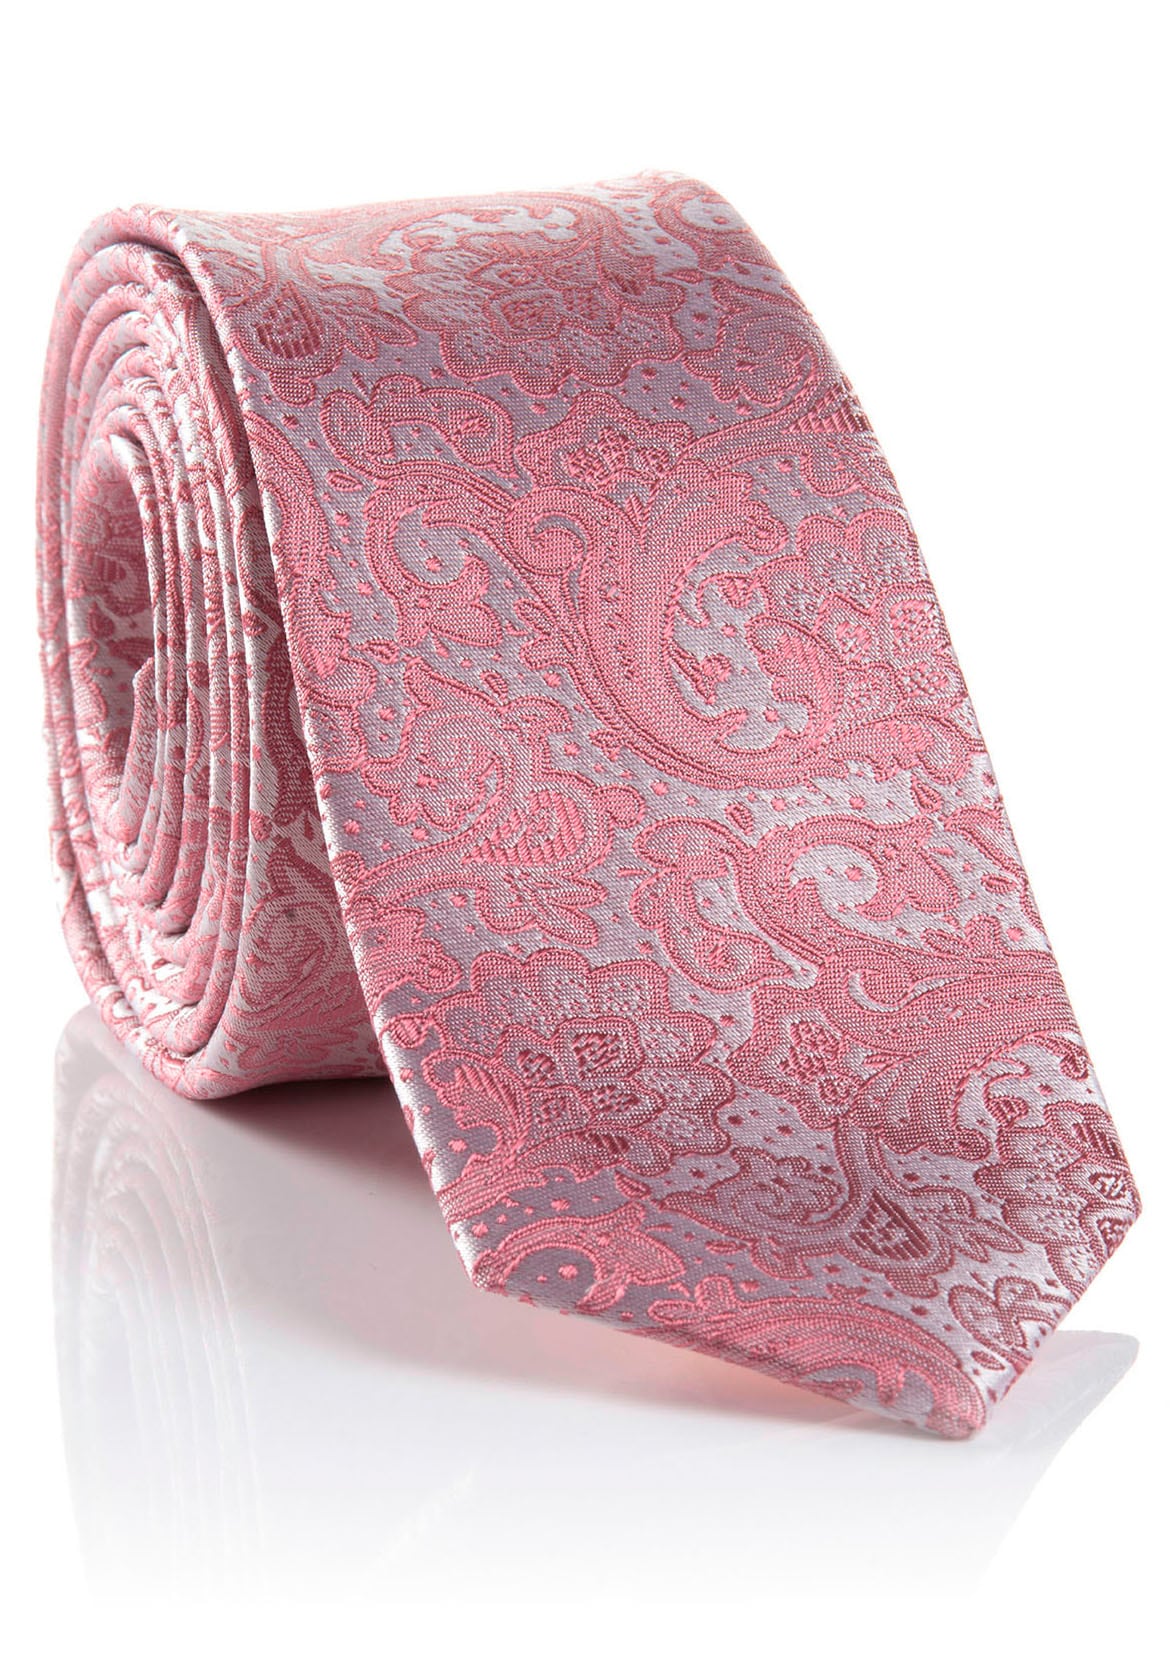 MONTI Krawatte »LELIO«, Krawatte aus reiner Seide, Paisley-Muster